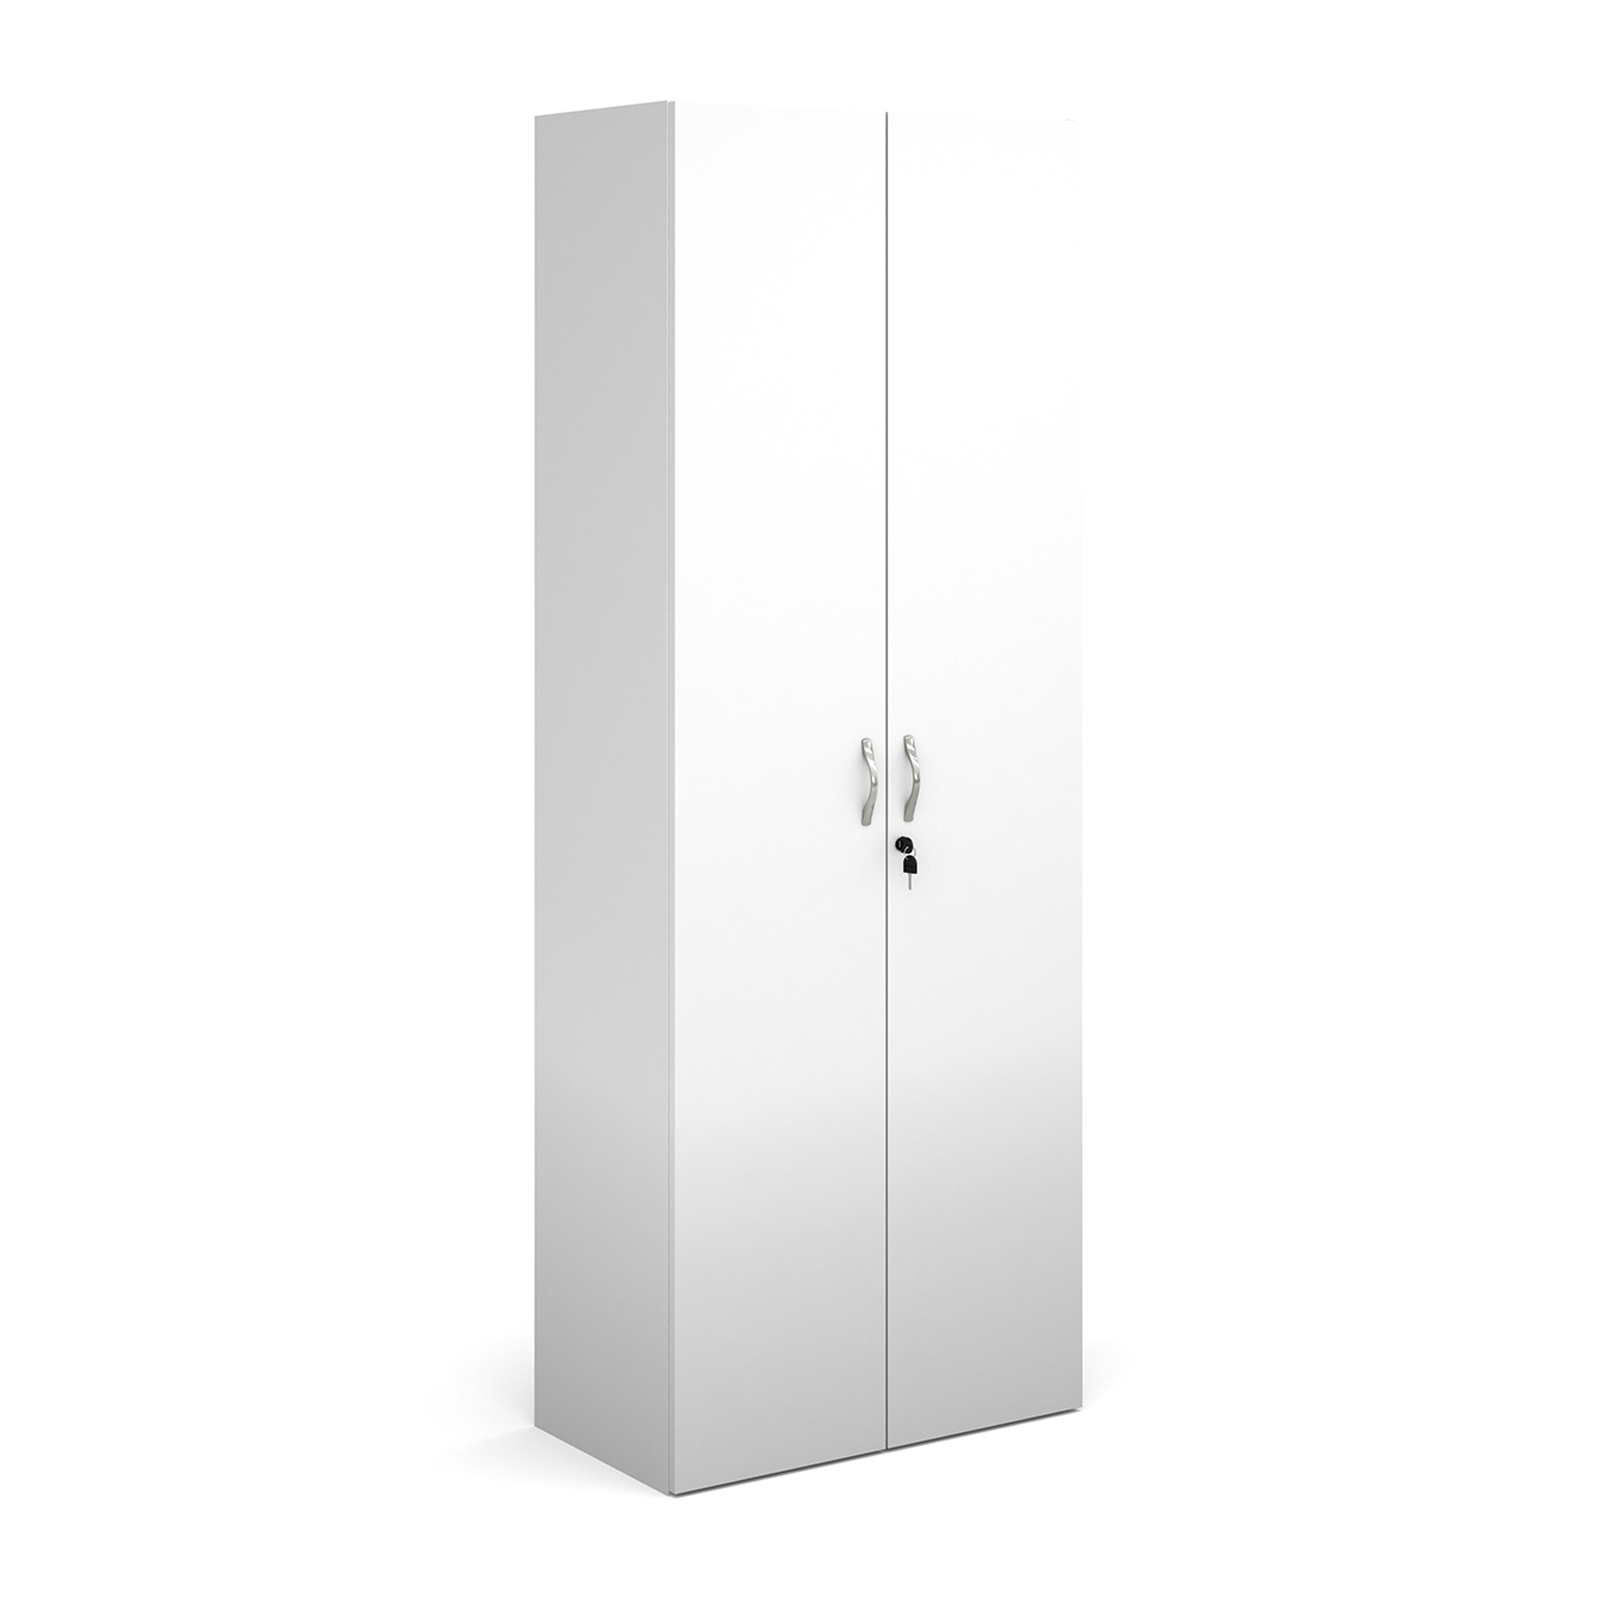 Value Line Classic+ Double Door Office Cupboards, 4 Shelf - 76wx39dx203h (cm), White